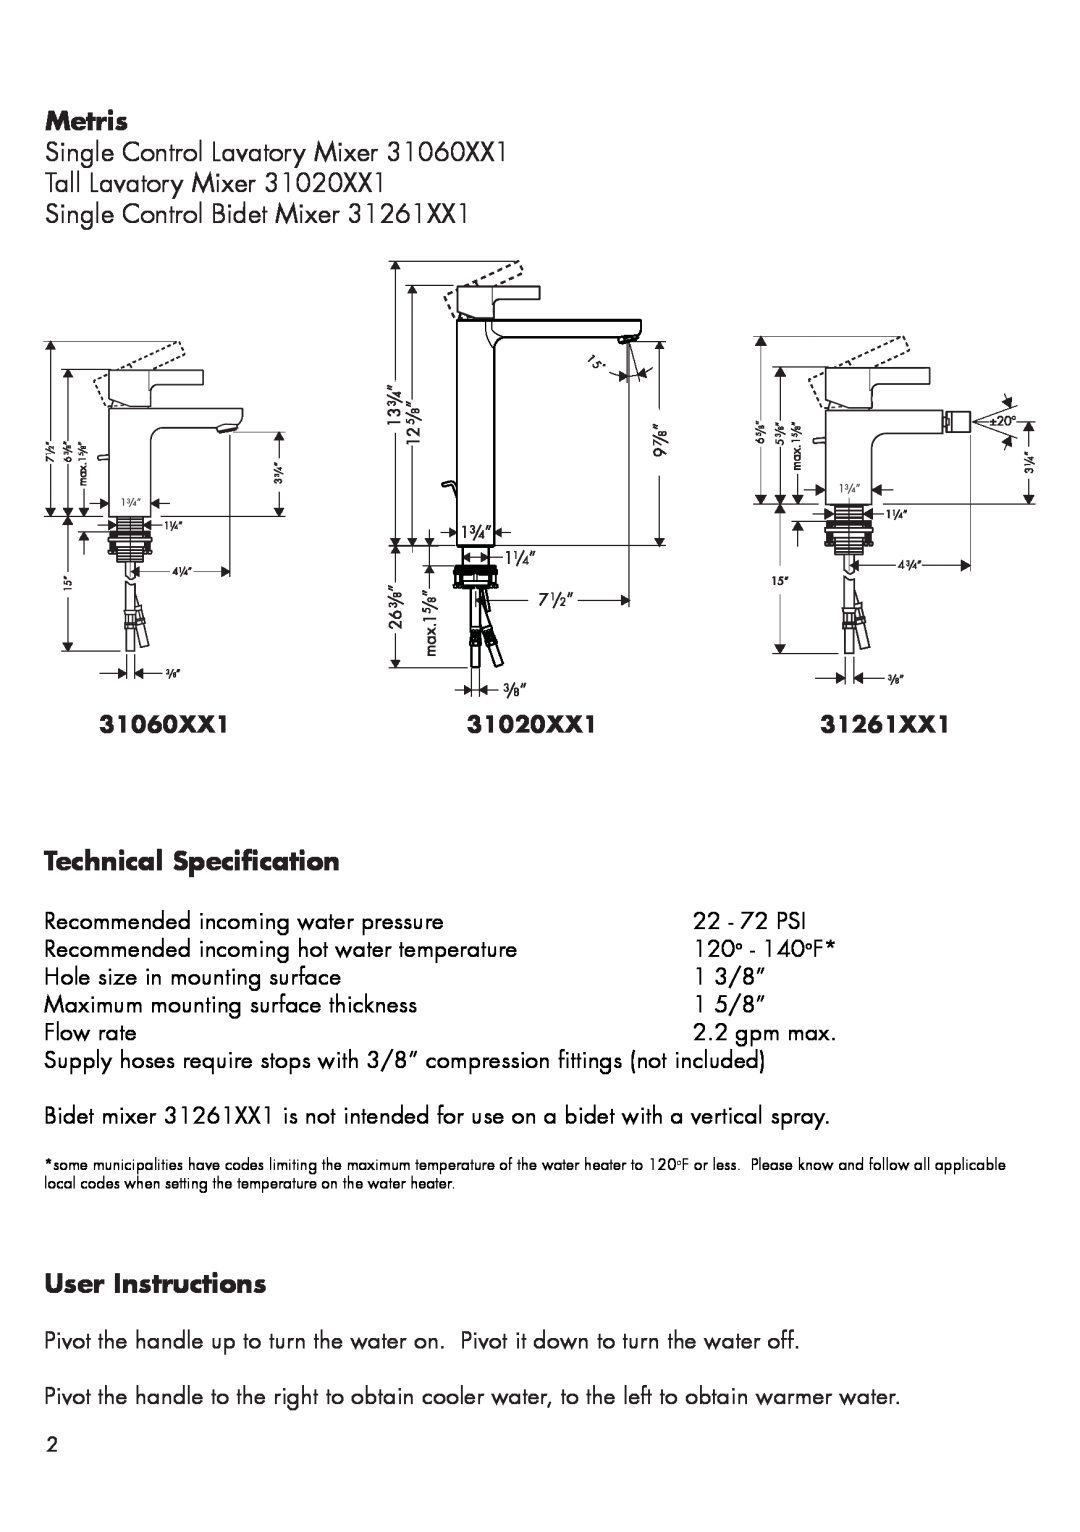 Hans Grohe 31261XX1 Metris, Technical Specification, User Instructions, 31060XX1, 31020XX1, Single Control Bidet Mixer 